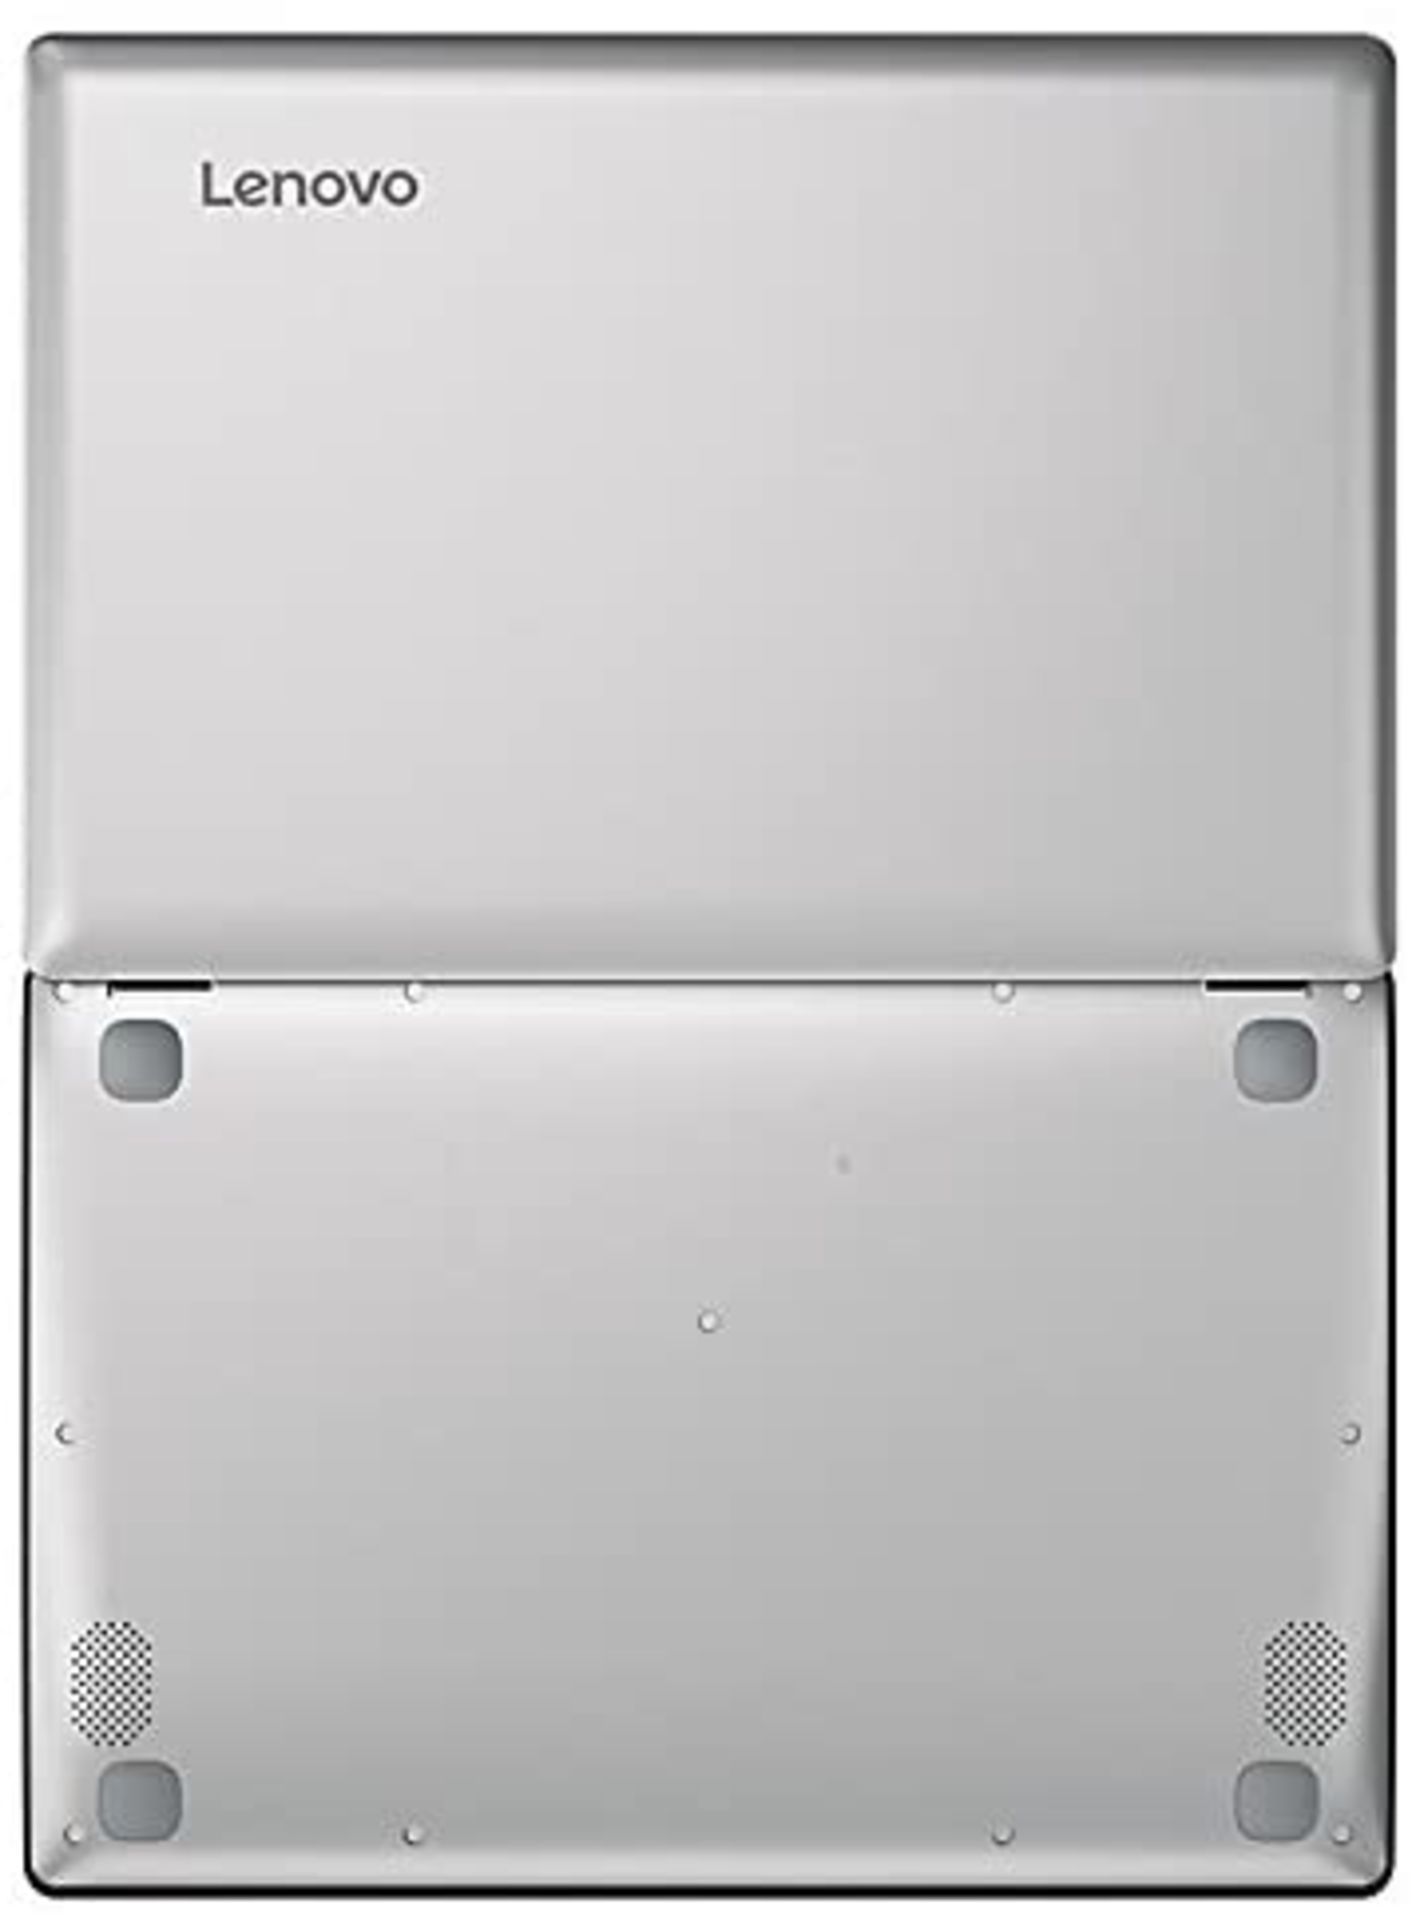 (T21) 1 x GRADE B - Lenovo Ideapad 110S 11.6" Laptop Intel Celeron N3060, 2GB RAM, 32GB eMMC, W... - Image 3 of 3